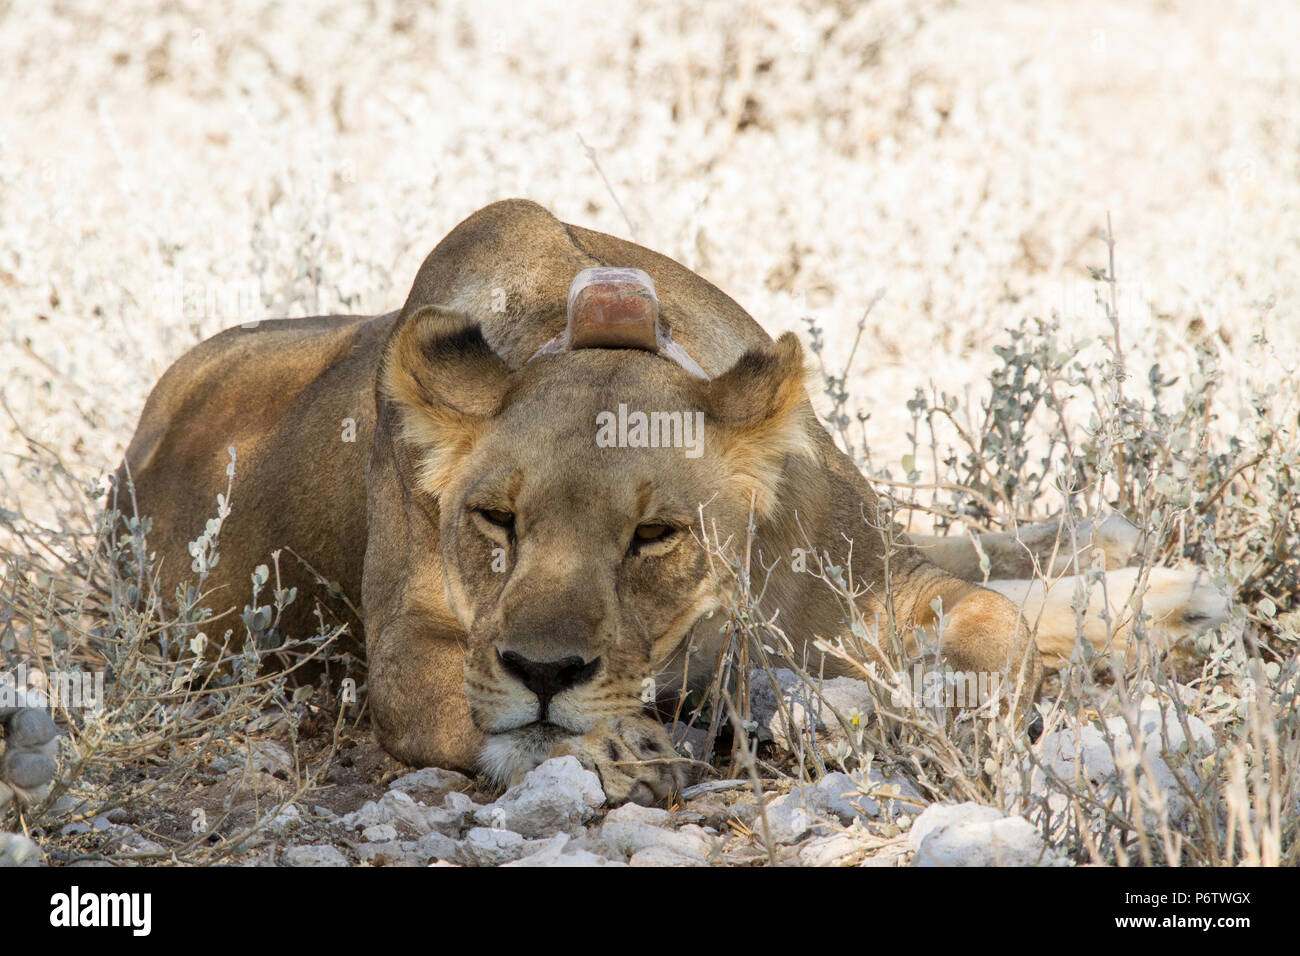 Alert but resting Lion - Panthera leo - with eyes open, in Etosha, Namibia. Showing tracking collar. Stock Photo